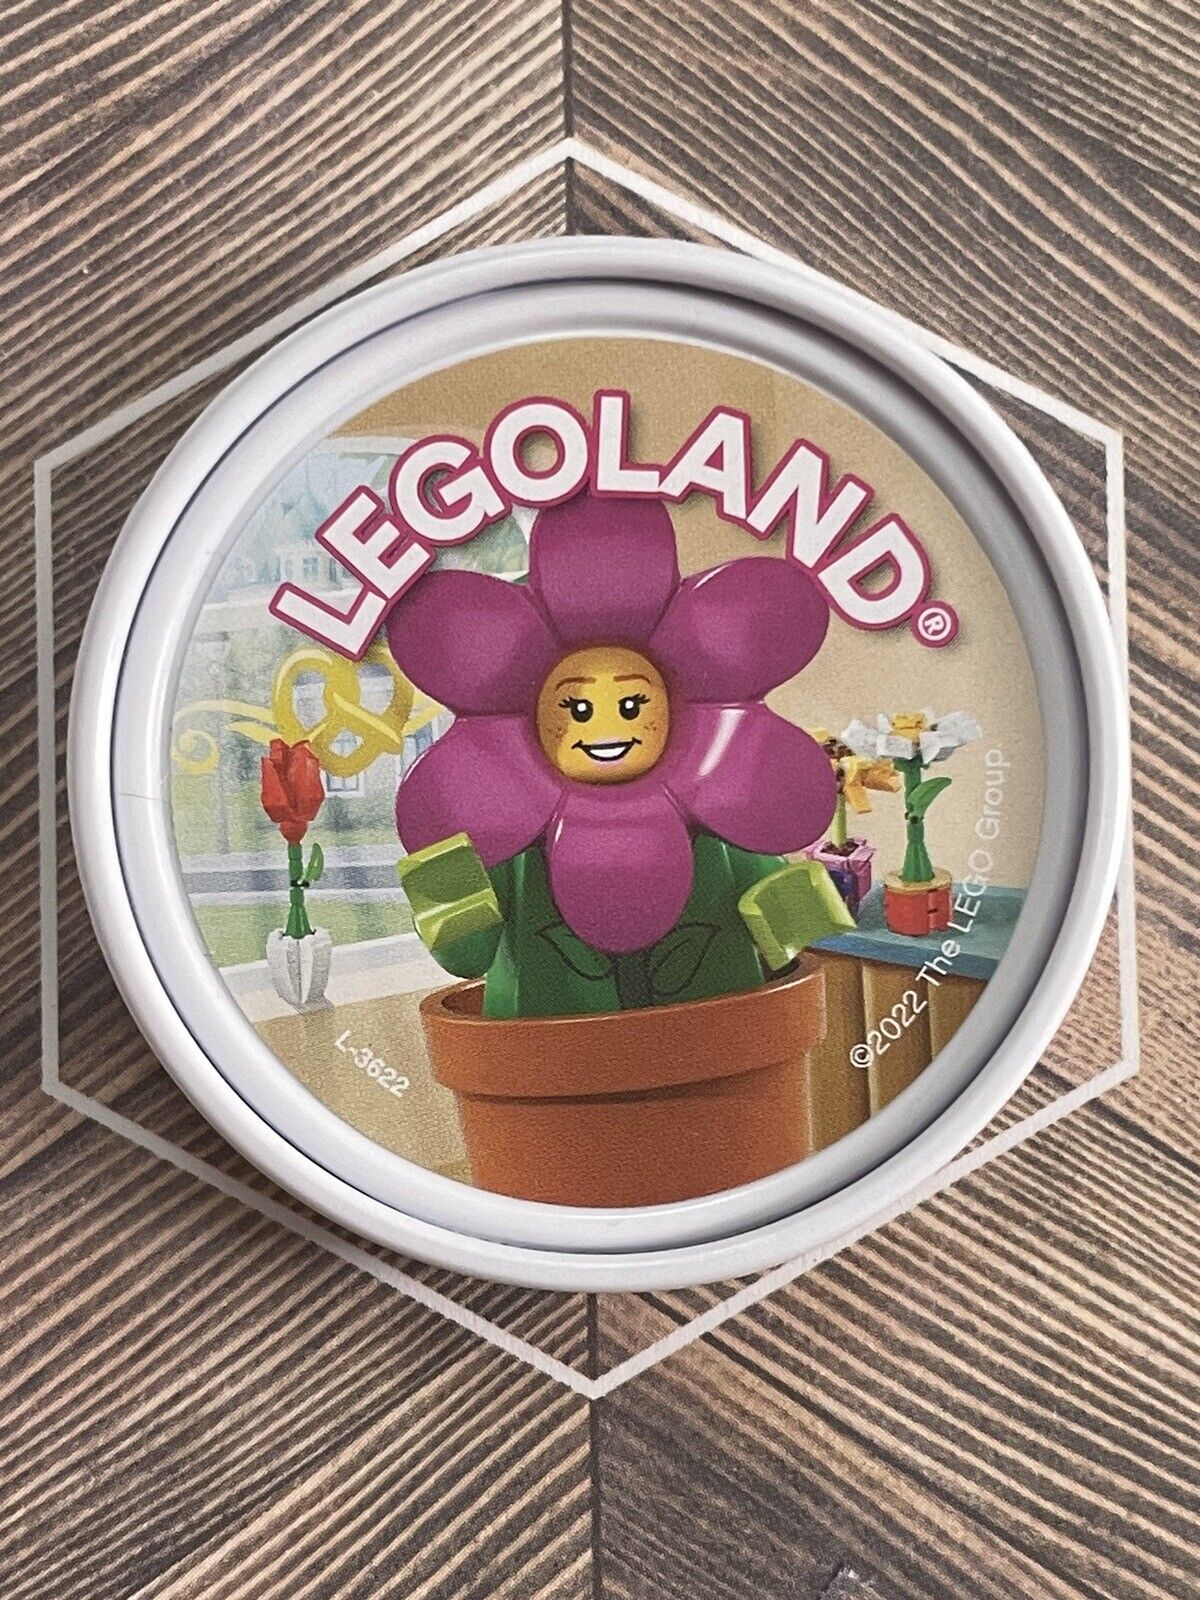 Flowerpot Legoland California Pop Badge Collectible